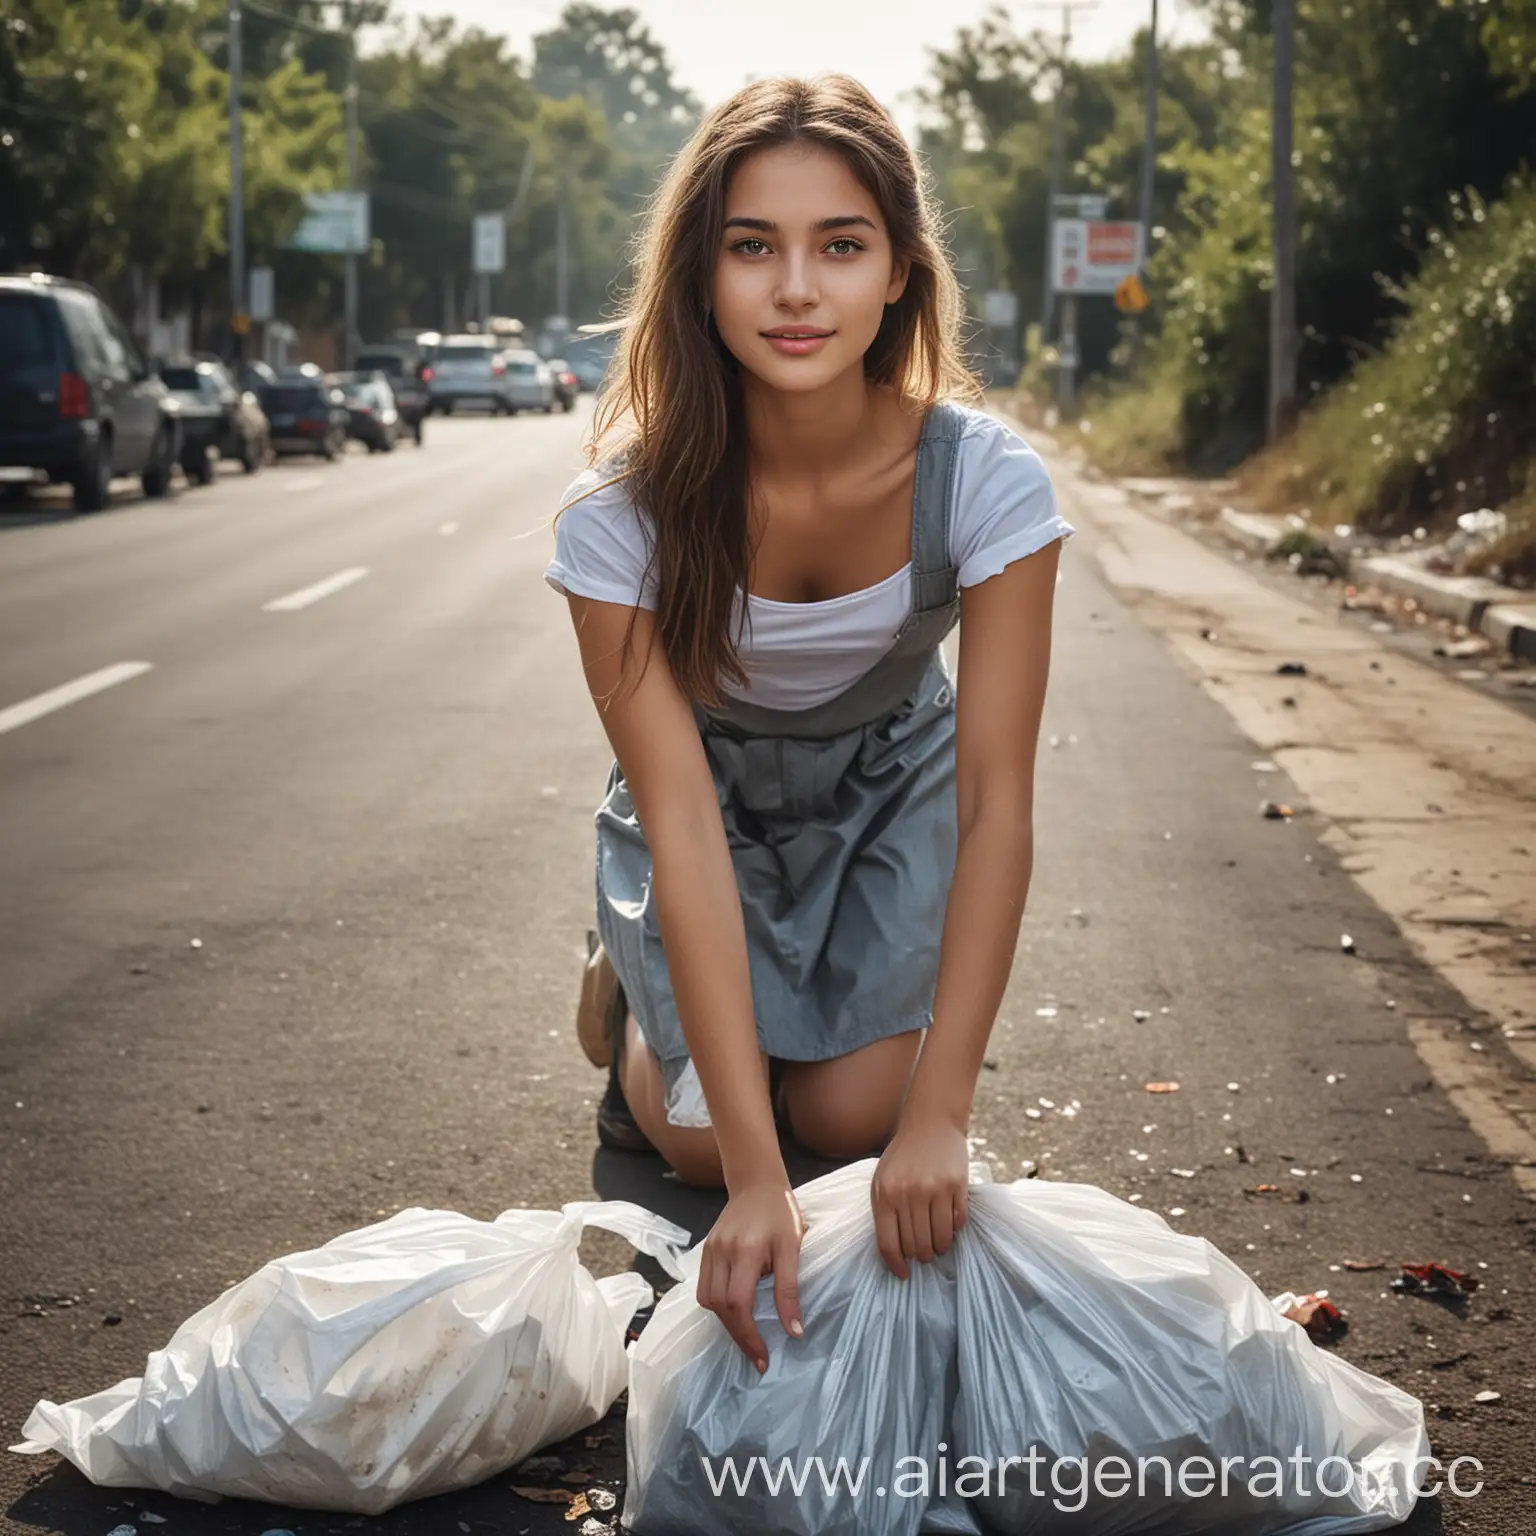 Beautiful-Girl-Cleaning-Roadside-Trash-into-Bags